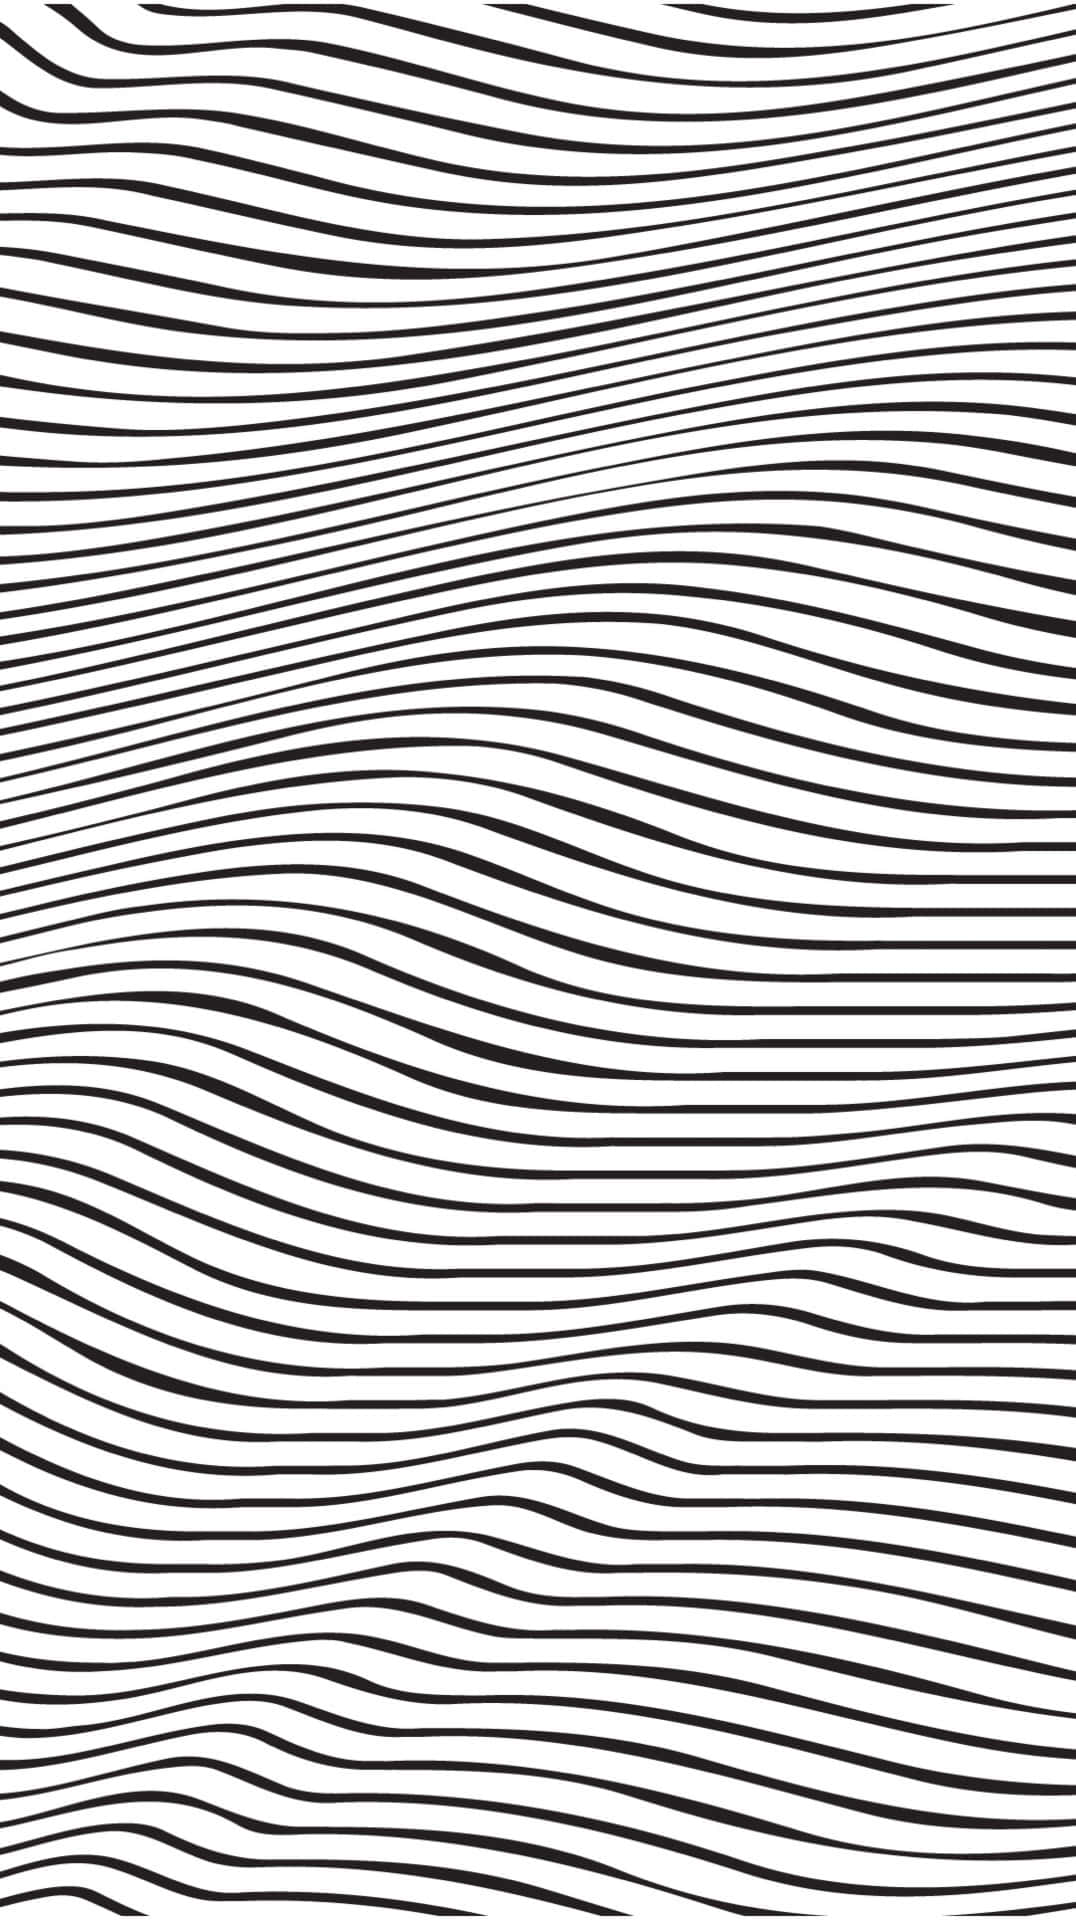 Einschwarz-weißes Wellenförmiges Muster Wallpaper